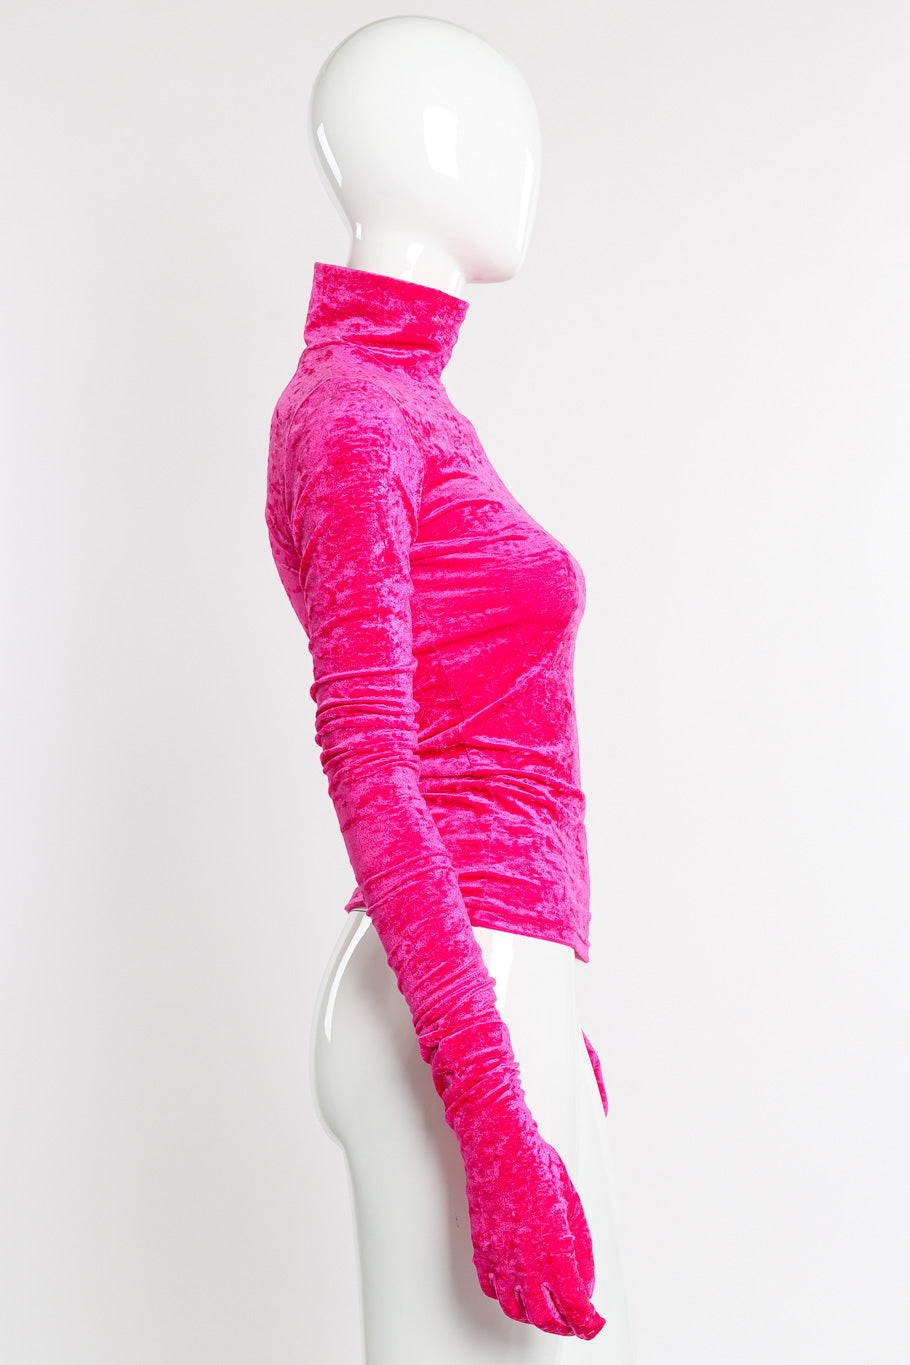 Balenciaga Velvet Turtleneck with Gloves side view on mannequin @Recessla